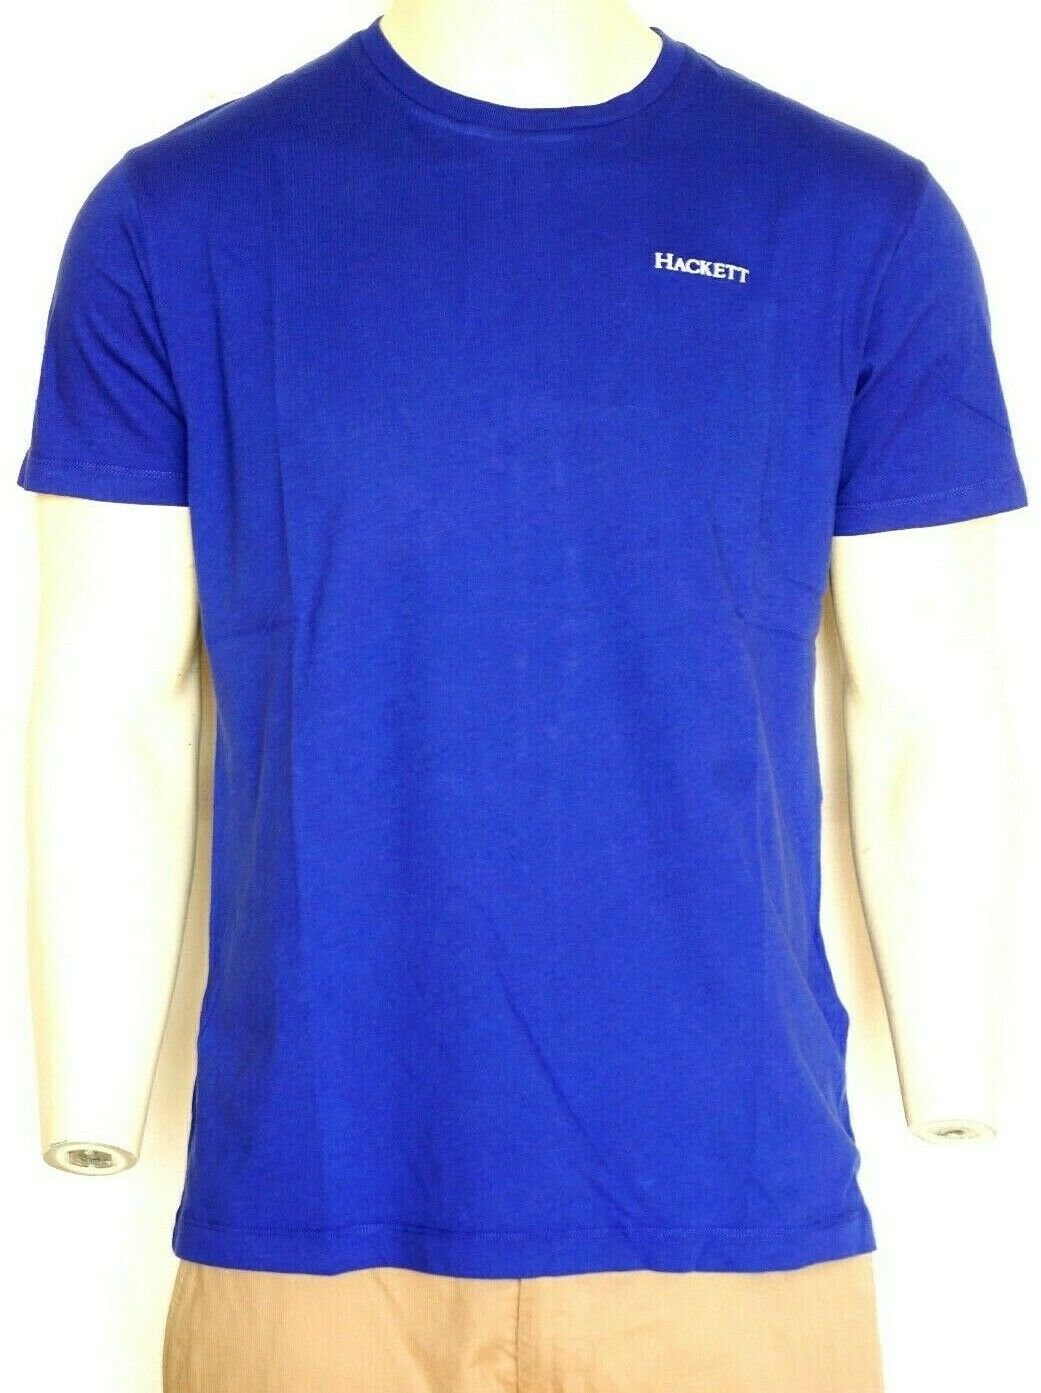 France T-Shirt, Hackett World Blau Herren Cup T-shirts Hackett T-Shirt Herren. Hacket